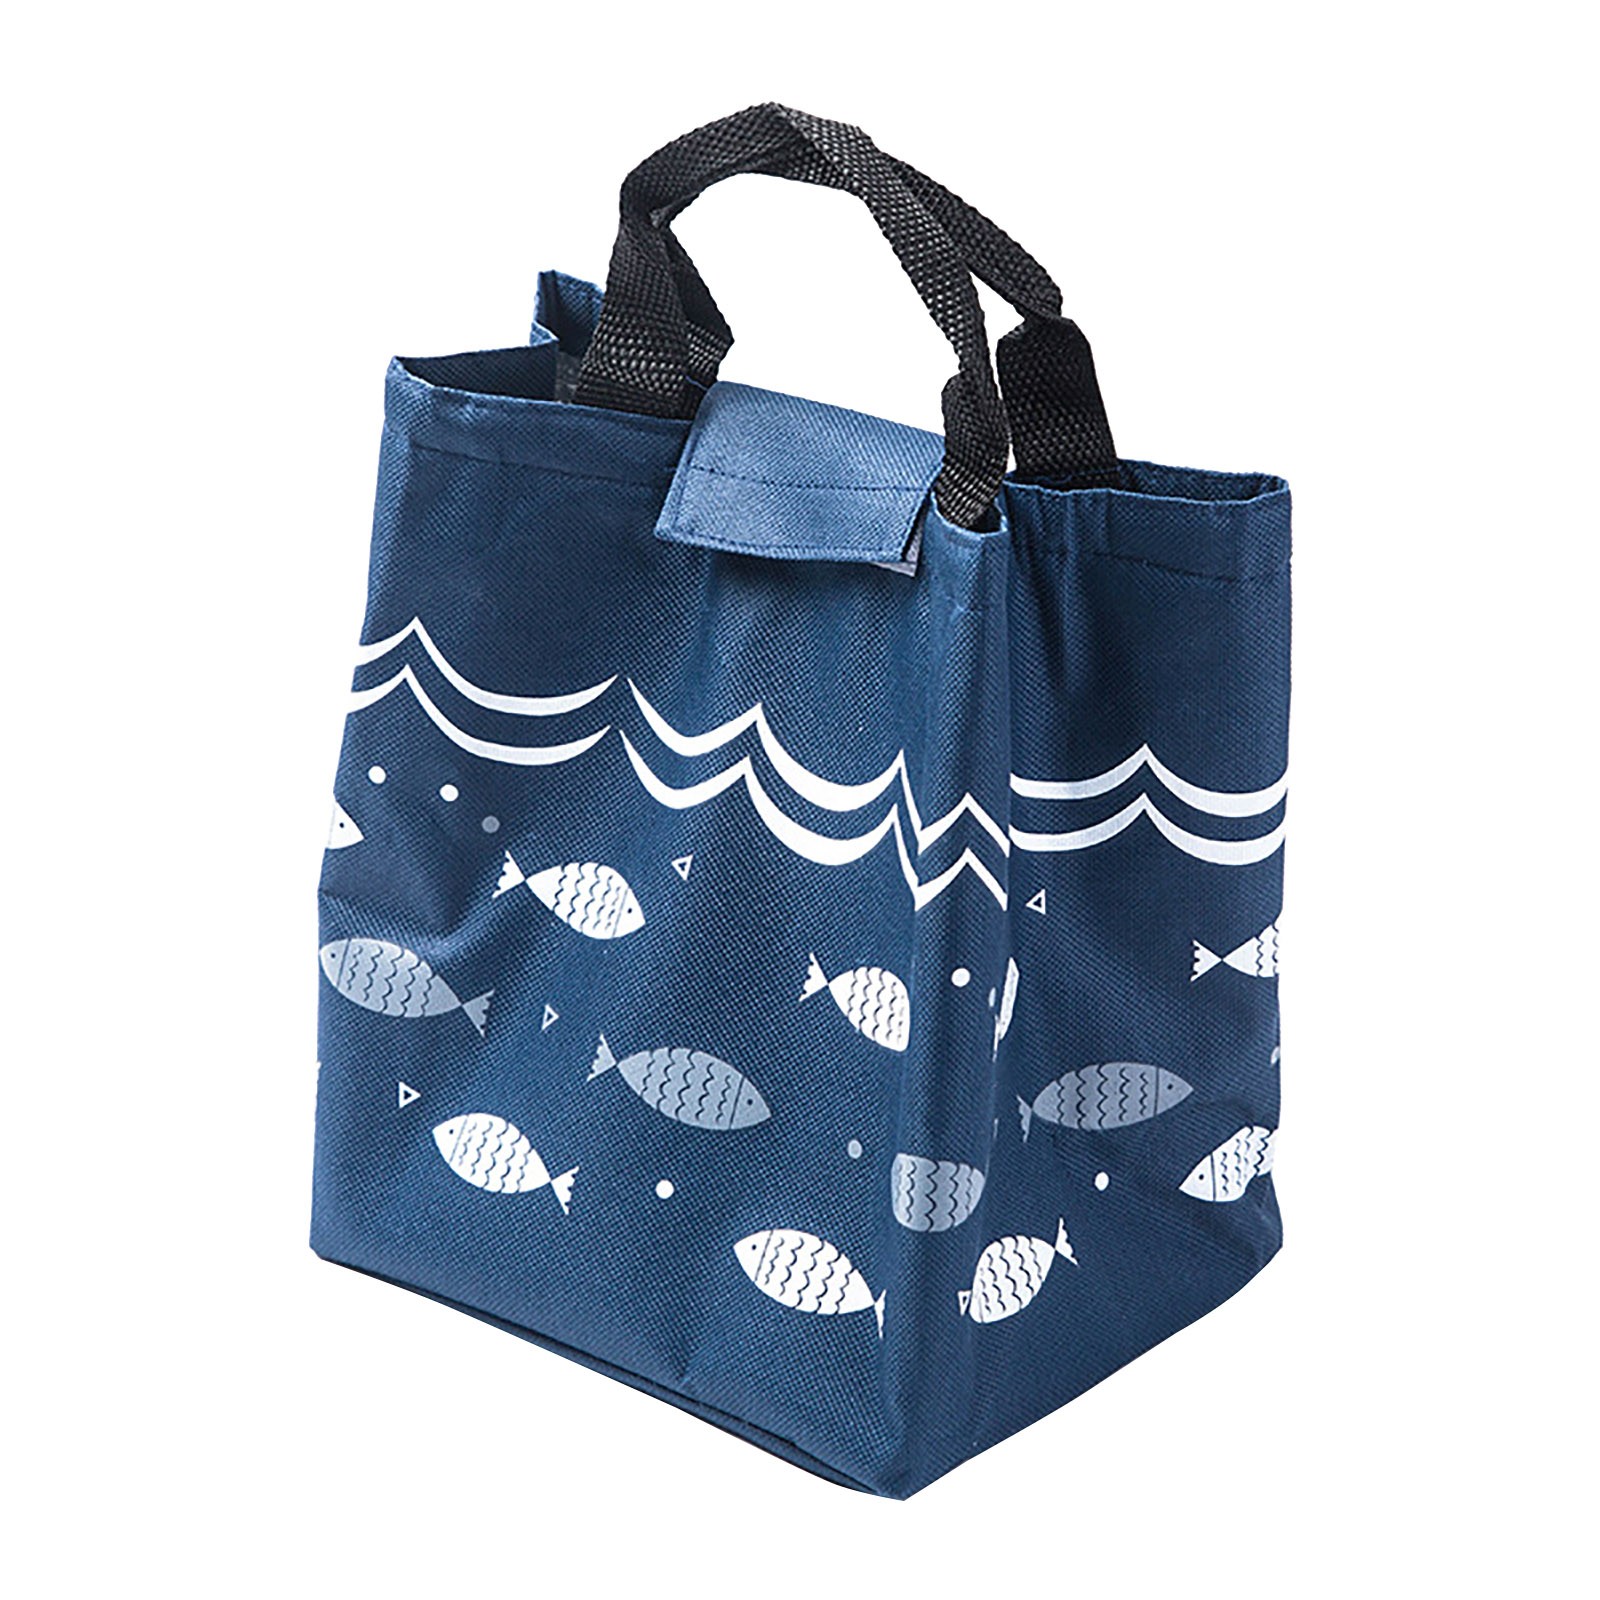 iOPQO Lunch Bag Meal Bag, Reusable Bag, Beach Cooler Bag, Lunch Bag Cooler Bag, Office School Picnic Beach Leakproof Lunch Box cute lunch bag bento bag (cyan) C - image 1 of 2